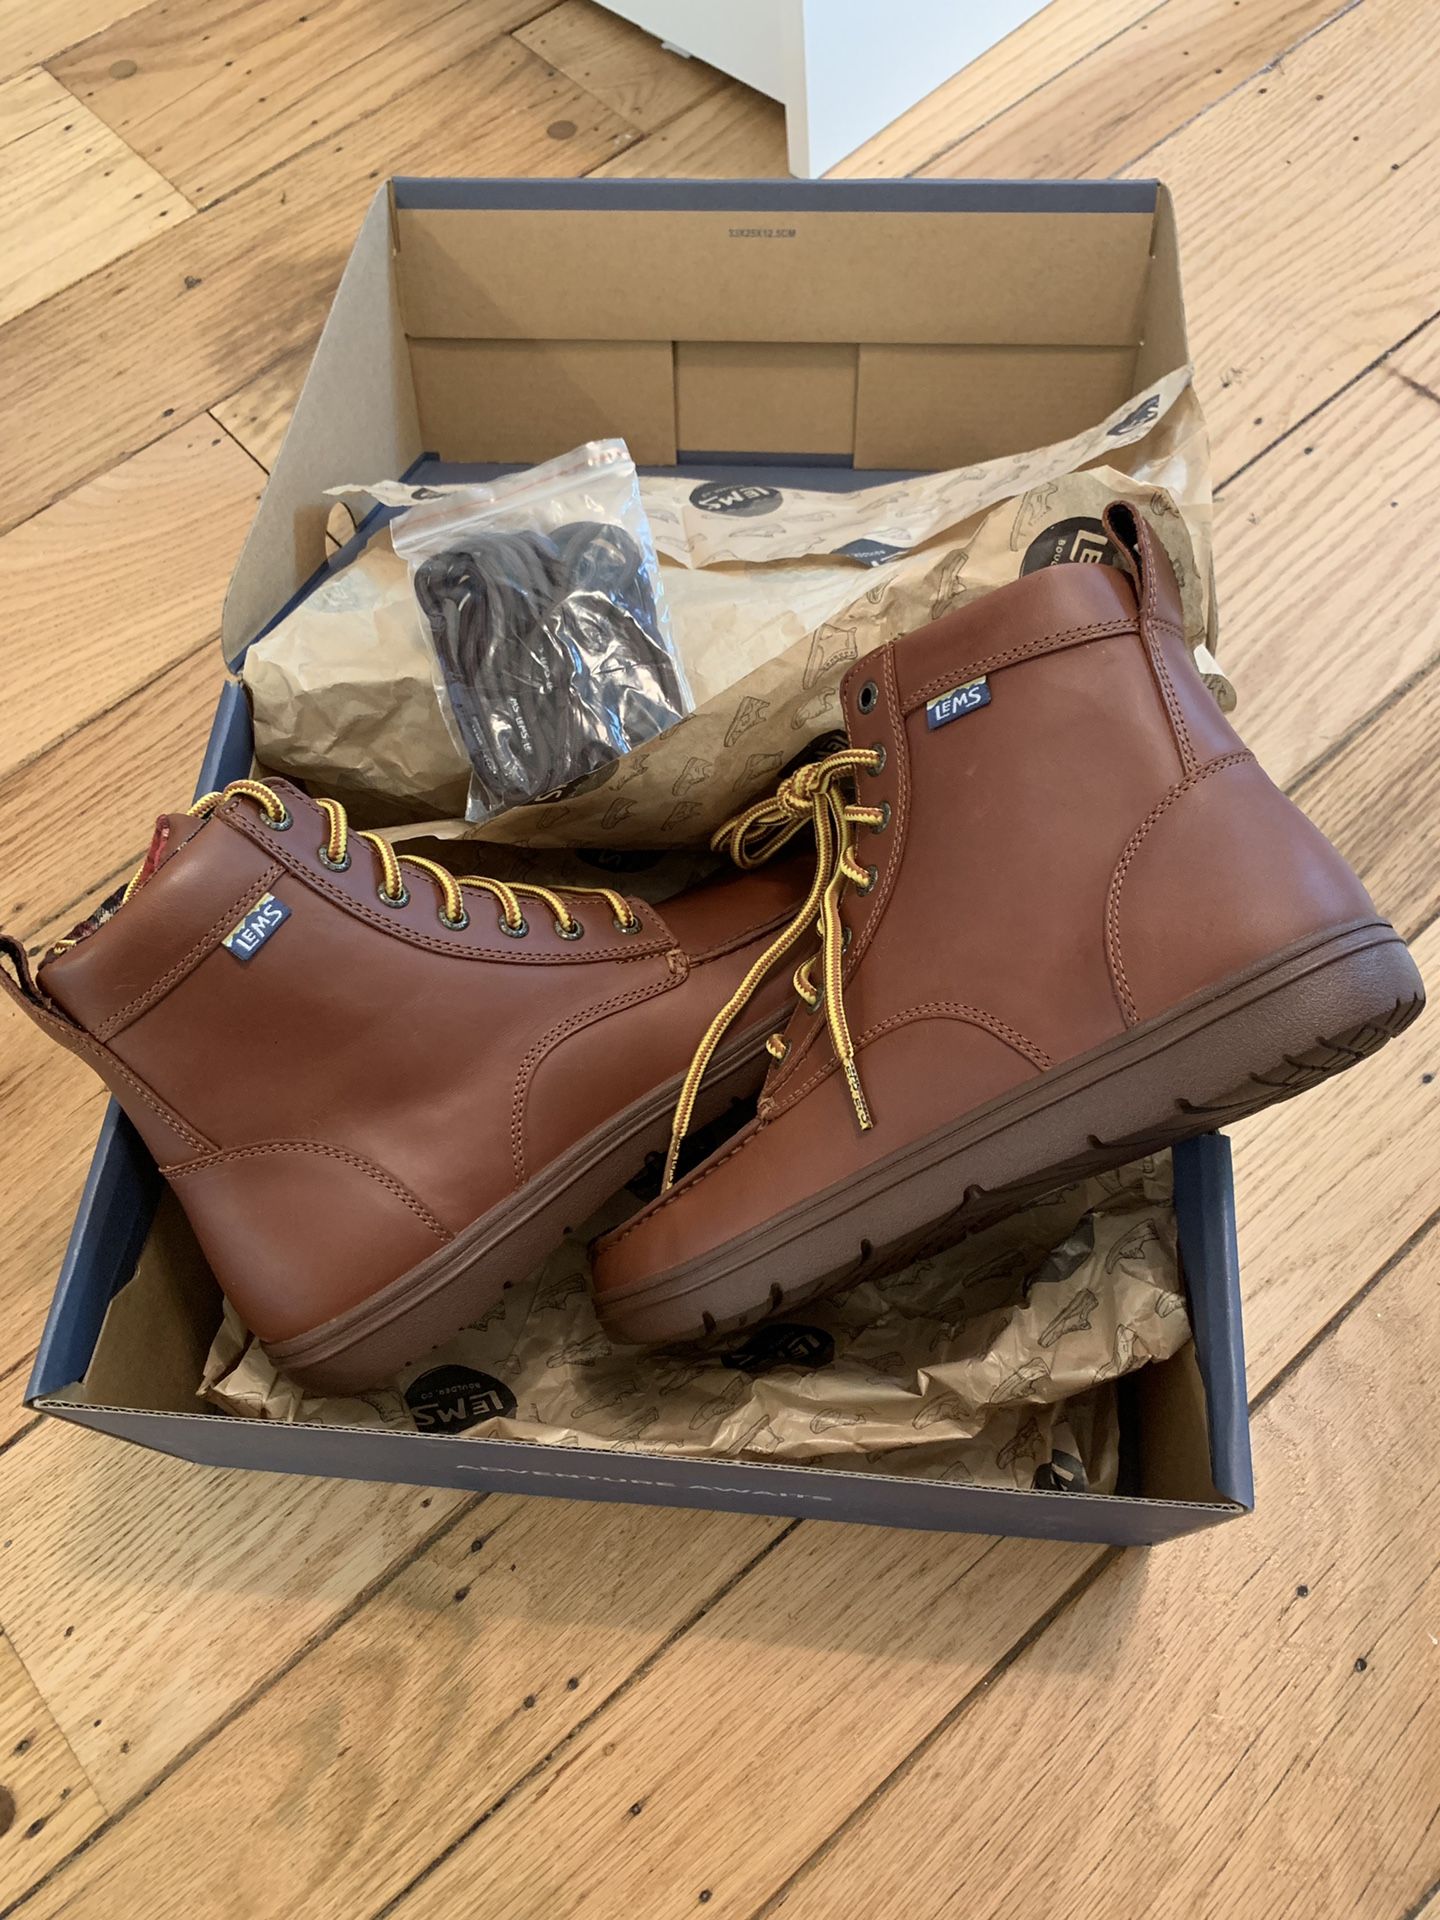 Lems Leather Boulder Boots Unisex, Russet Brown, Size 9 M/10.5 W